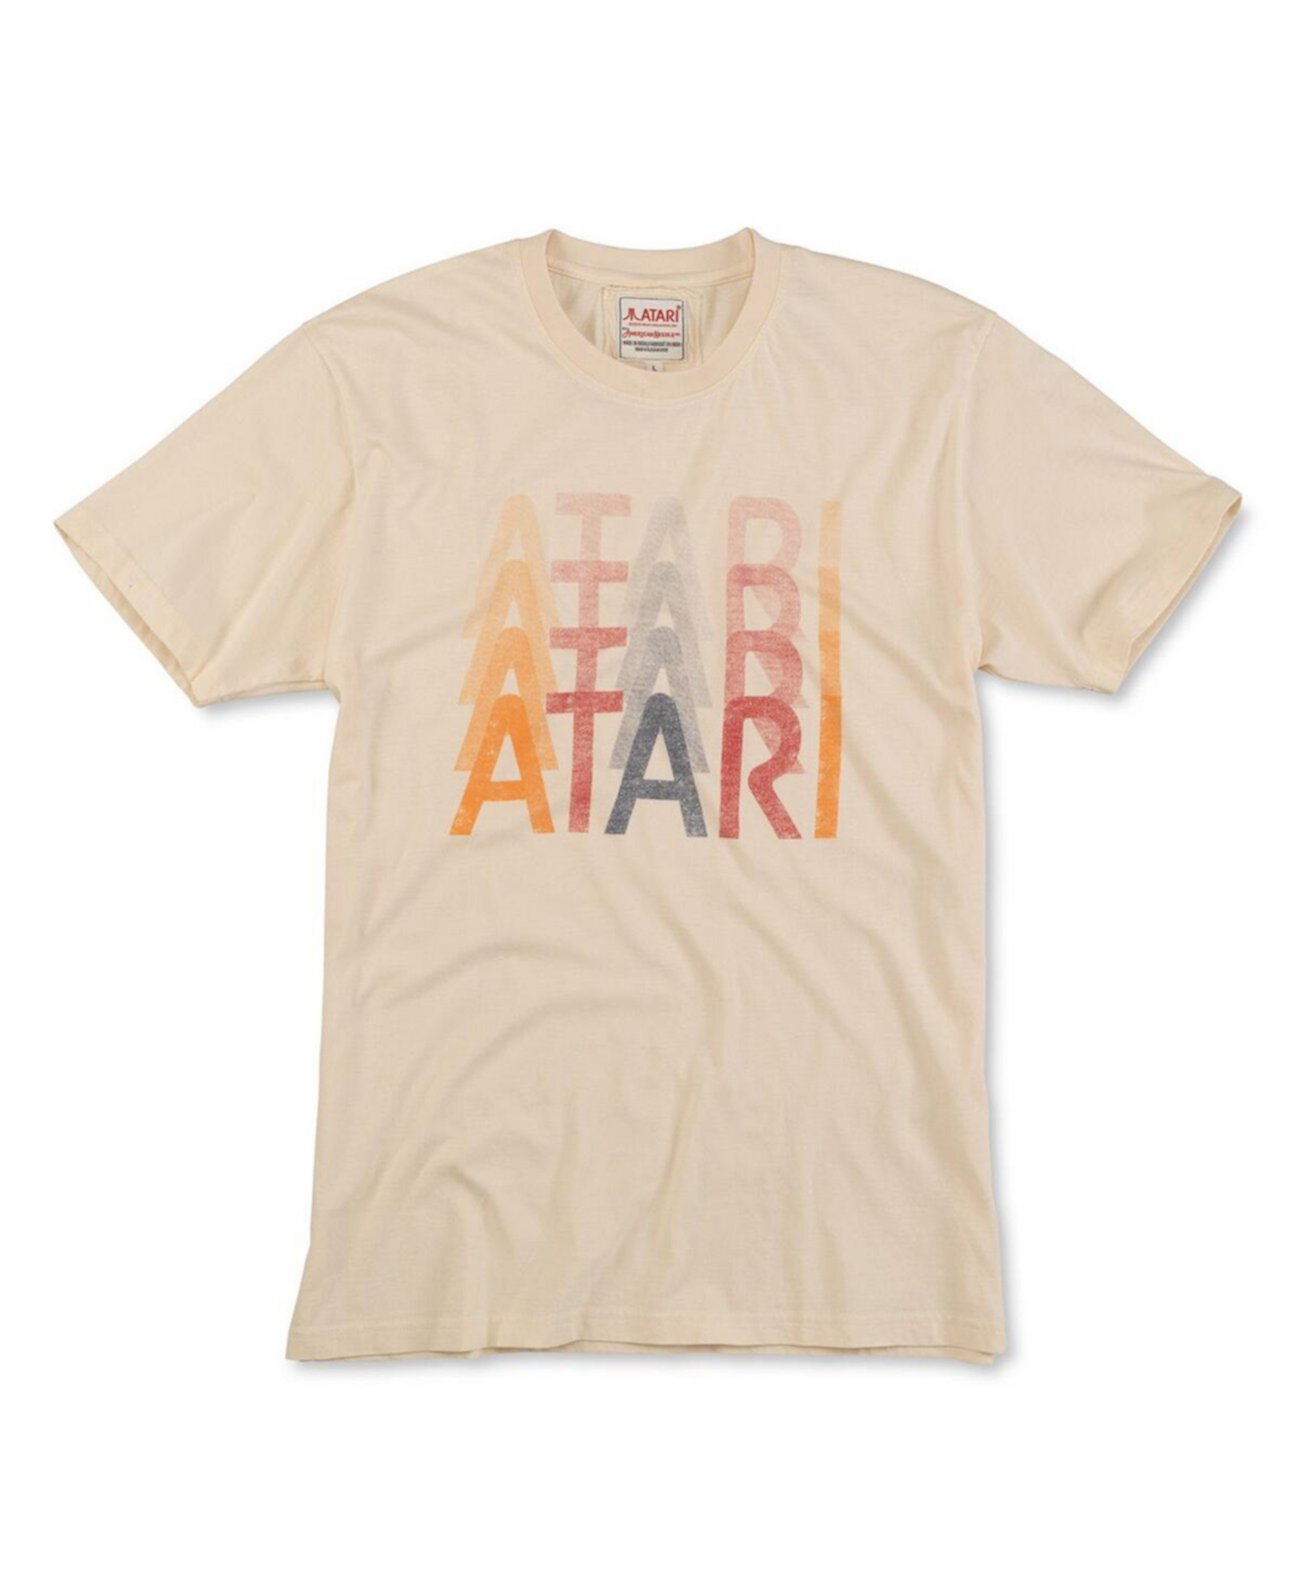 Men's and Women's Cream Distressed Atari Vintage-Like Fade T-shirt American Needle